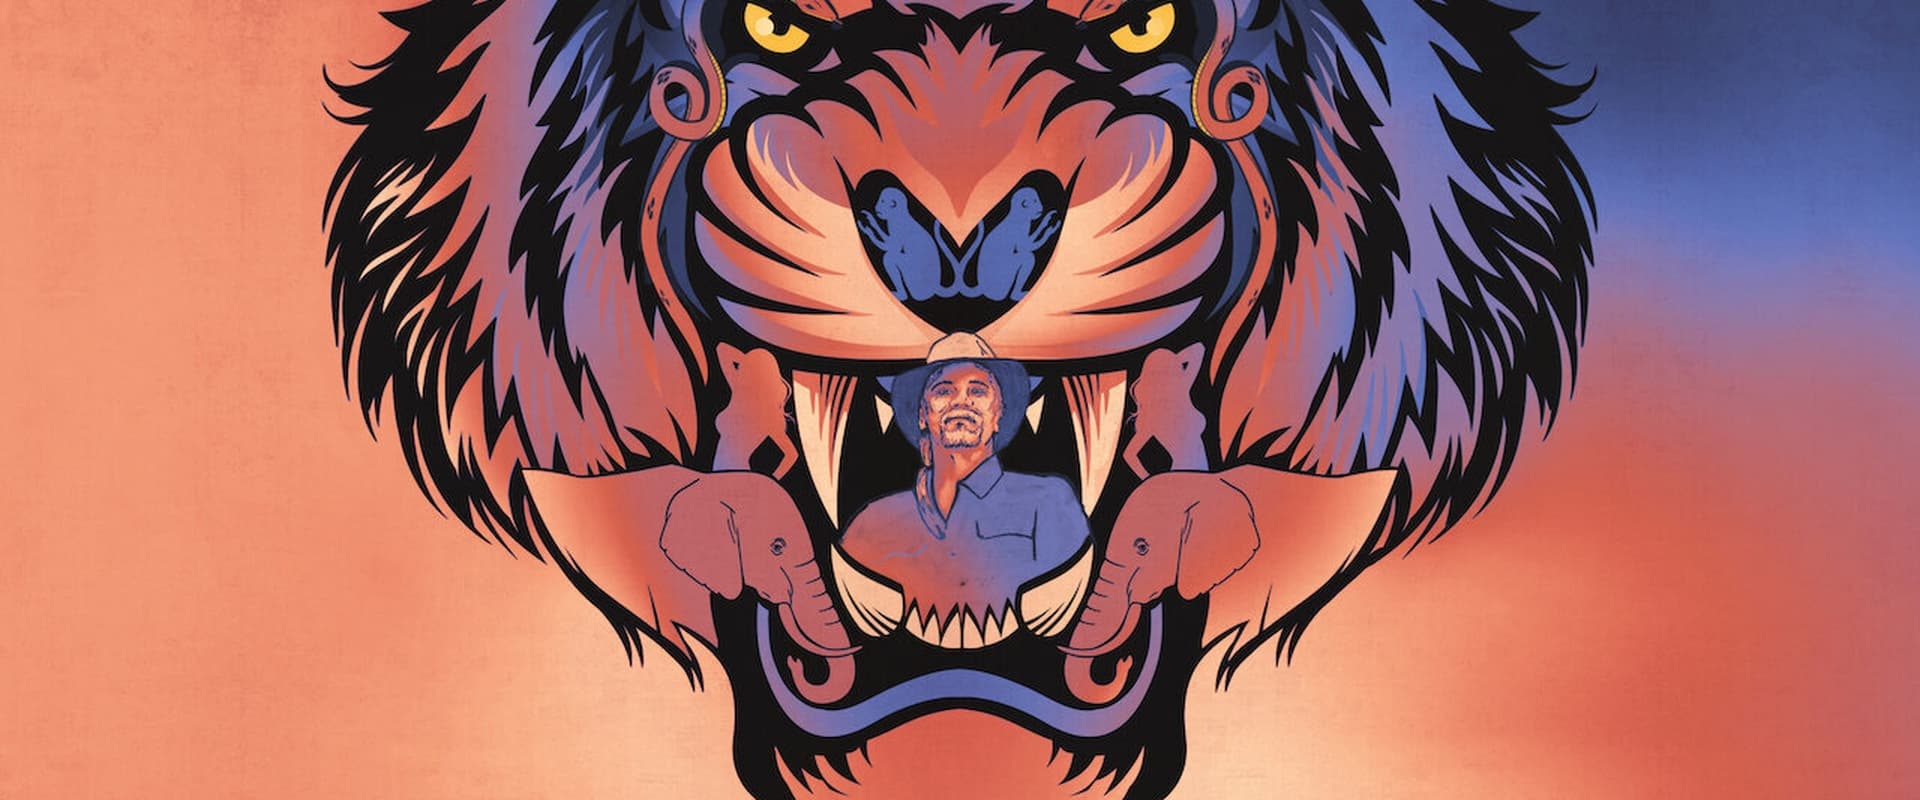 Tiger King: La historia de Doc Antle